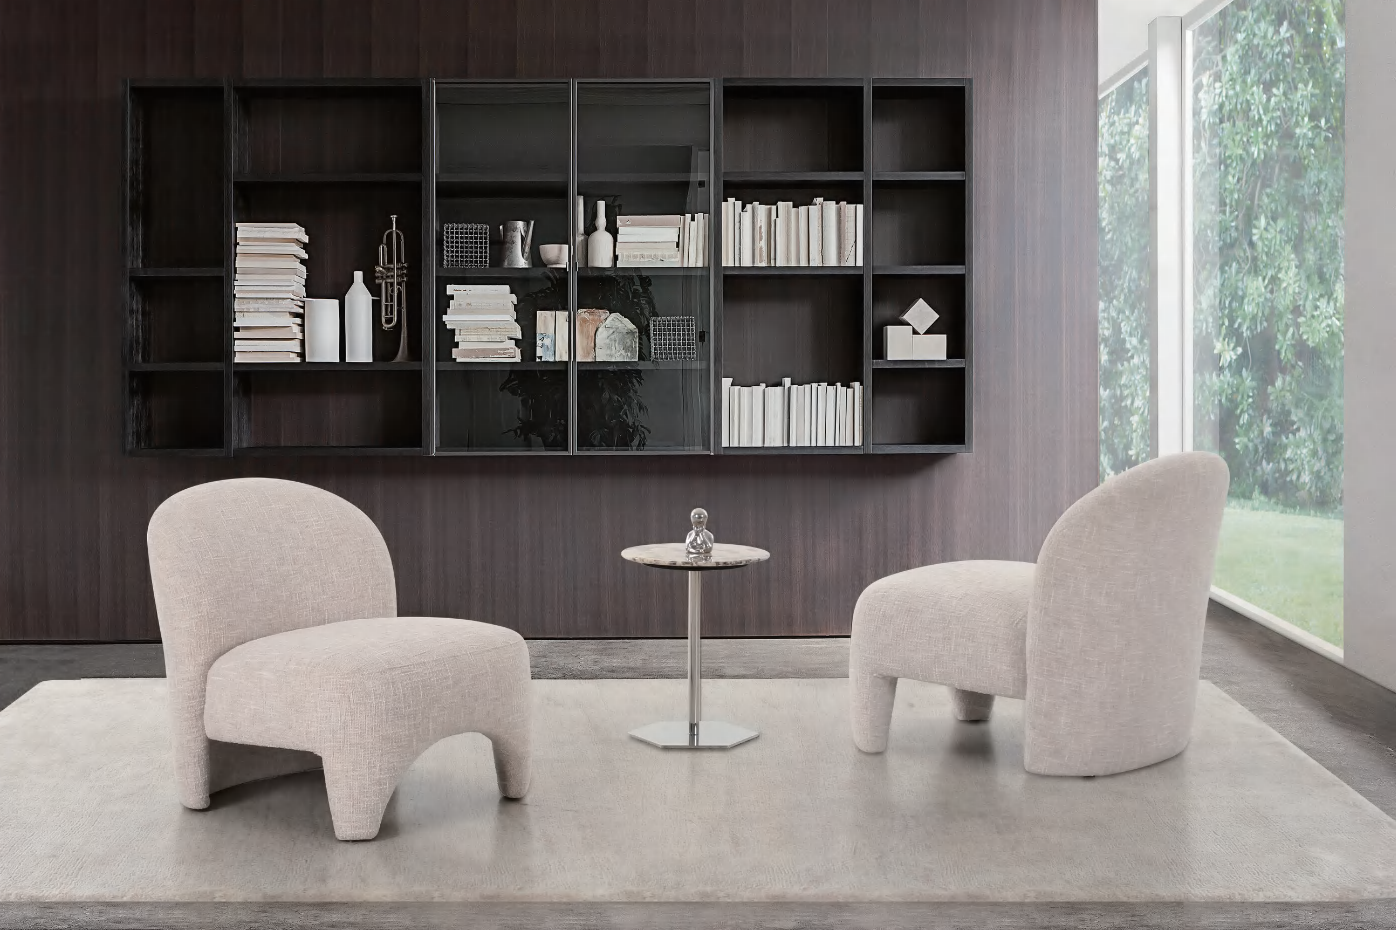 Mona Vale Chair - Future Classics Furniture